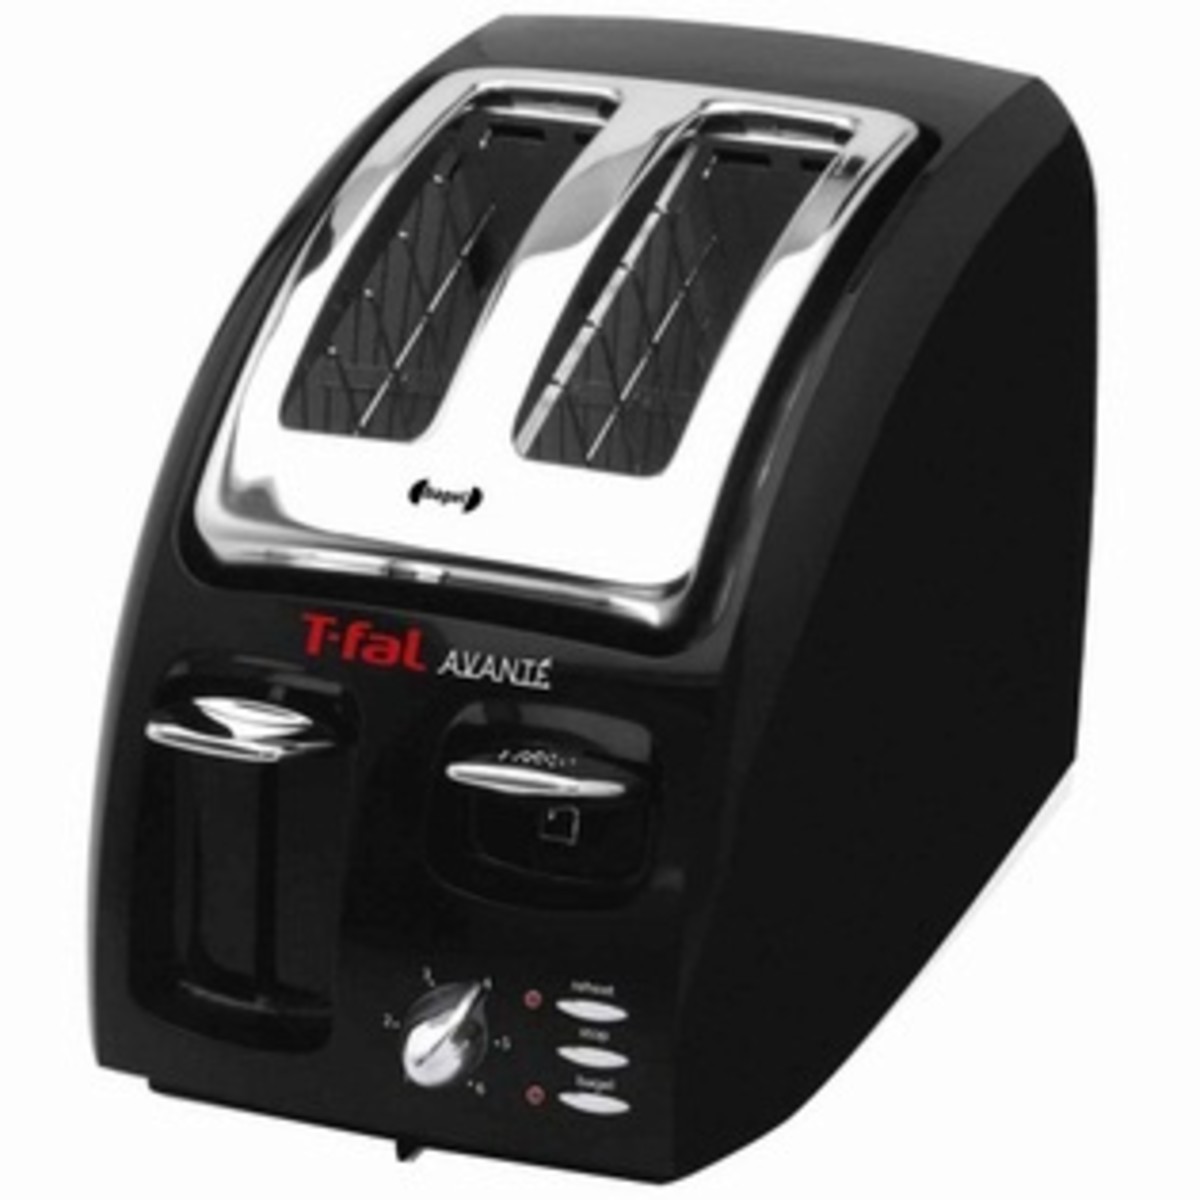 T-Fal Avante Classic 2-Slice toaster, Model # 8746002